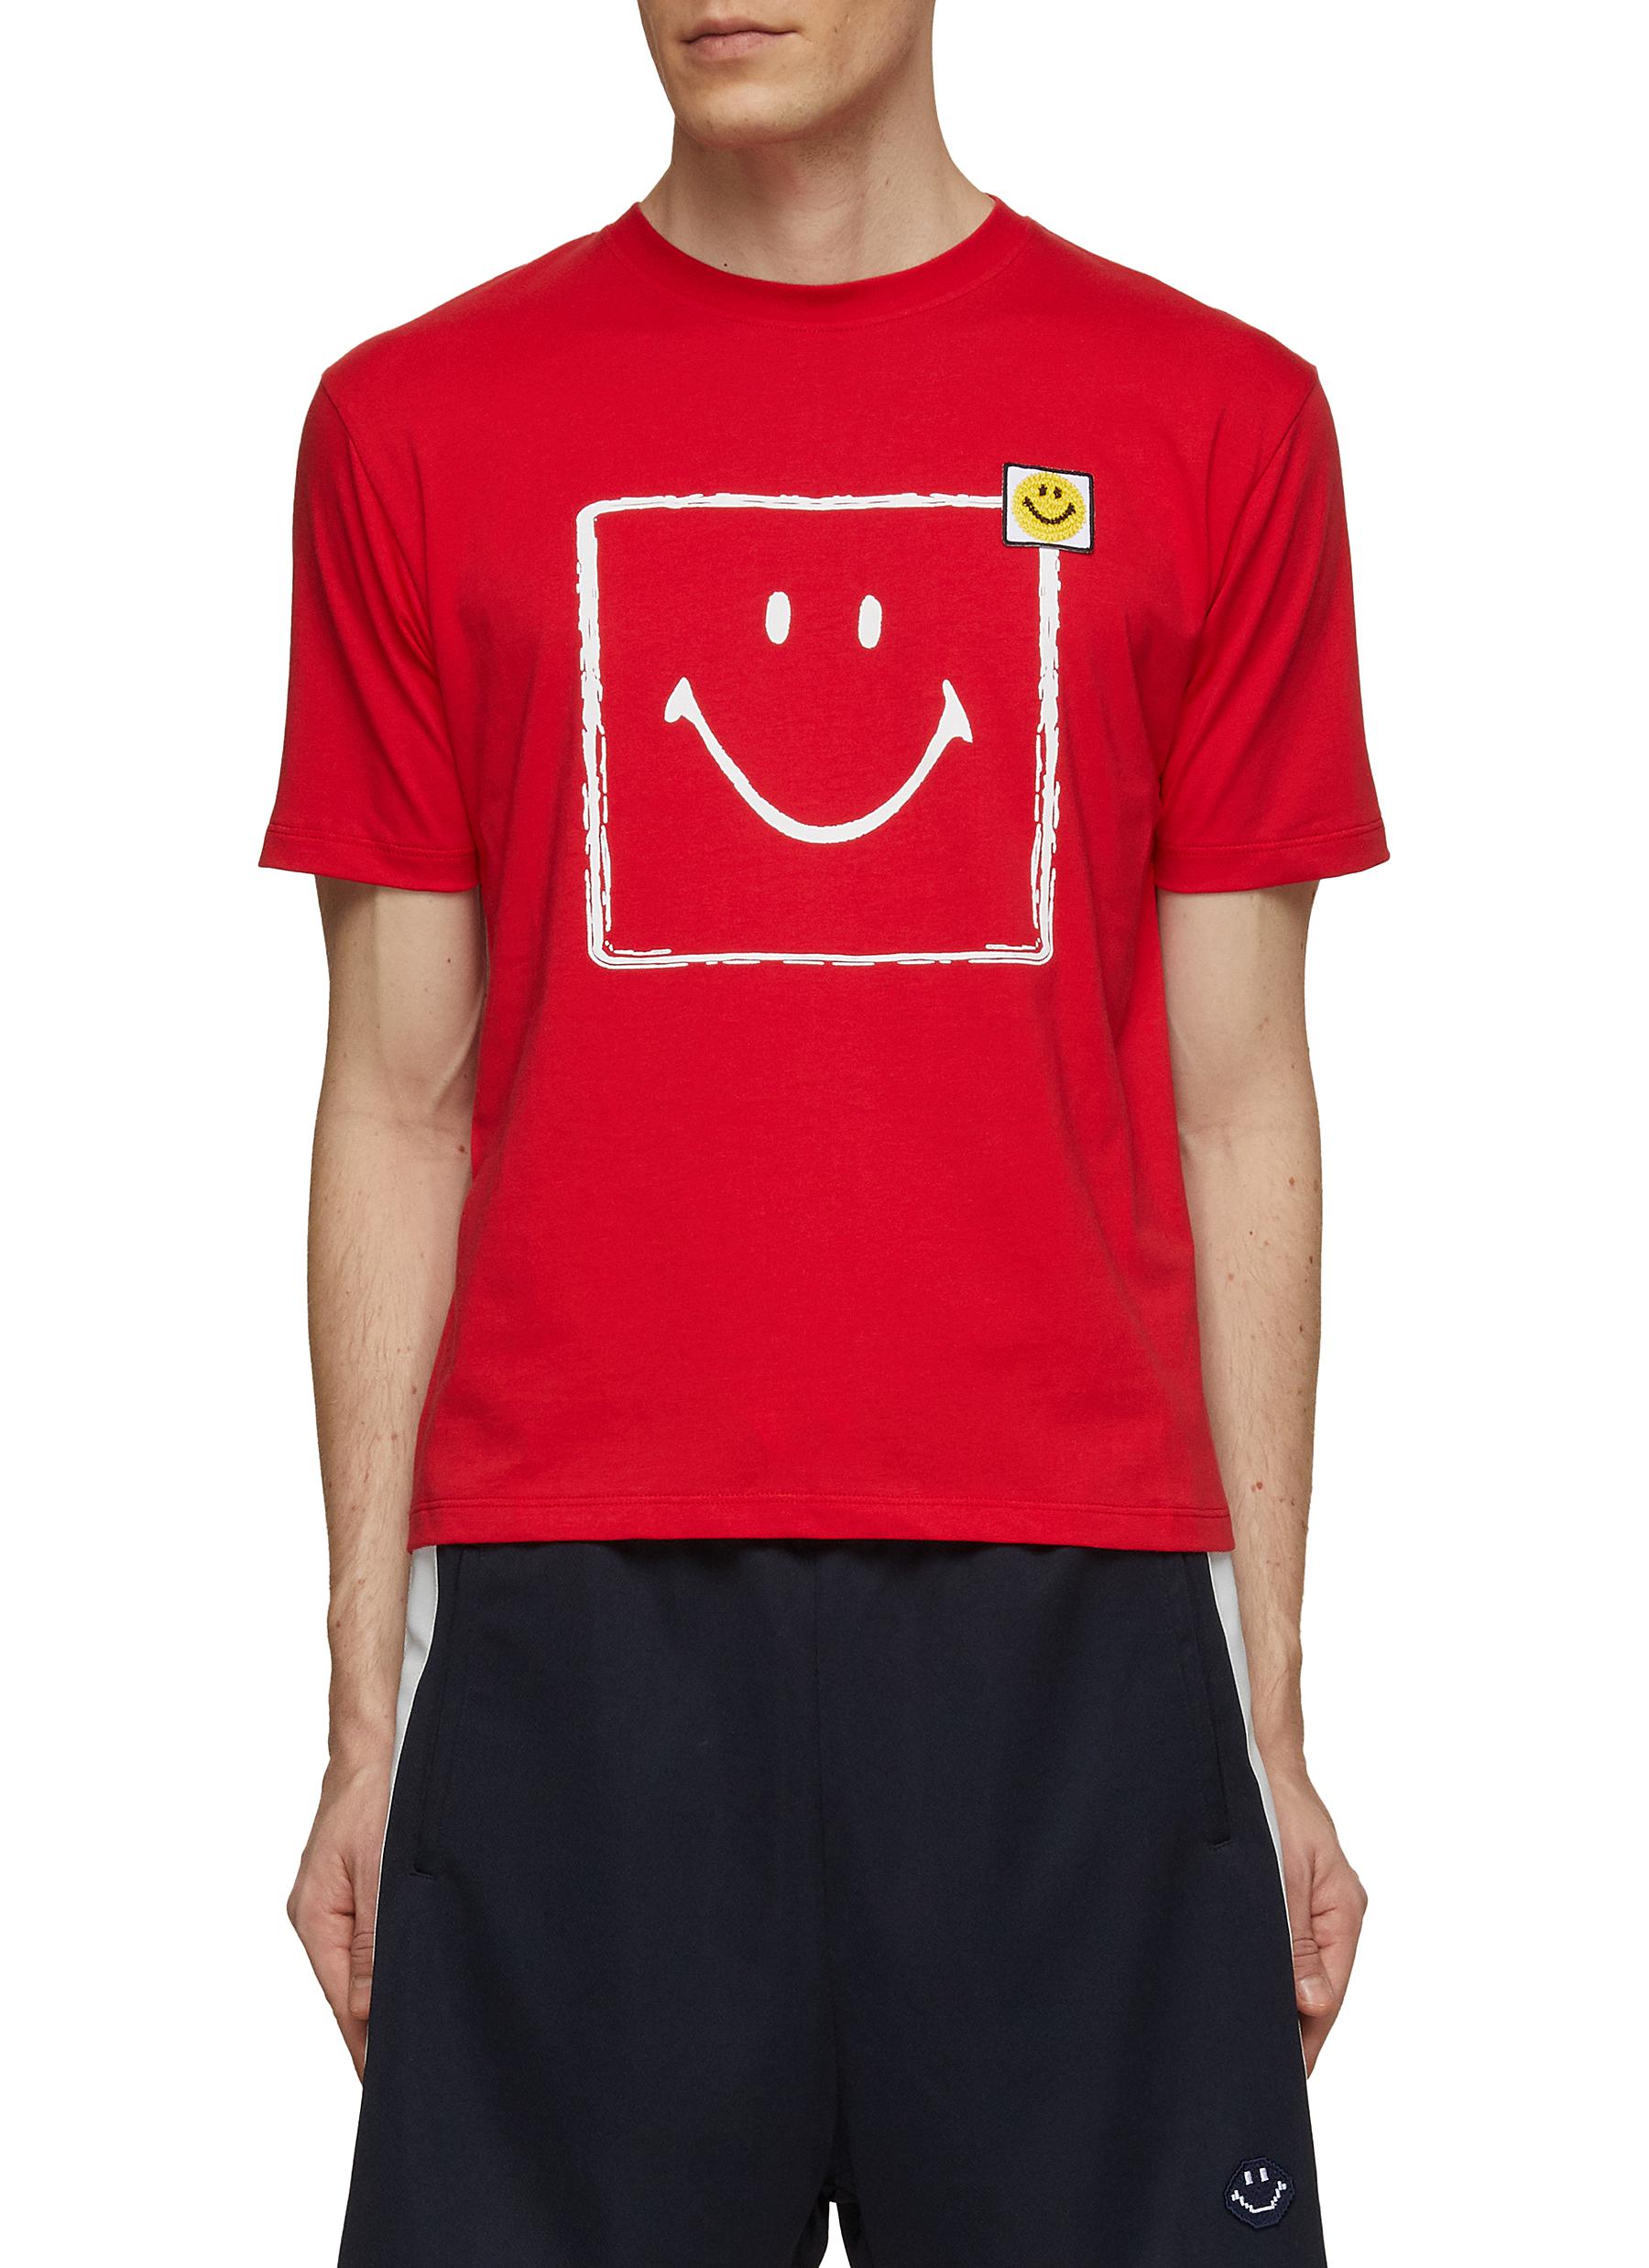 JOSHUA'S Square Smiley Face T-Shirt